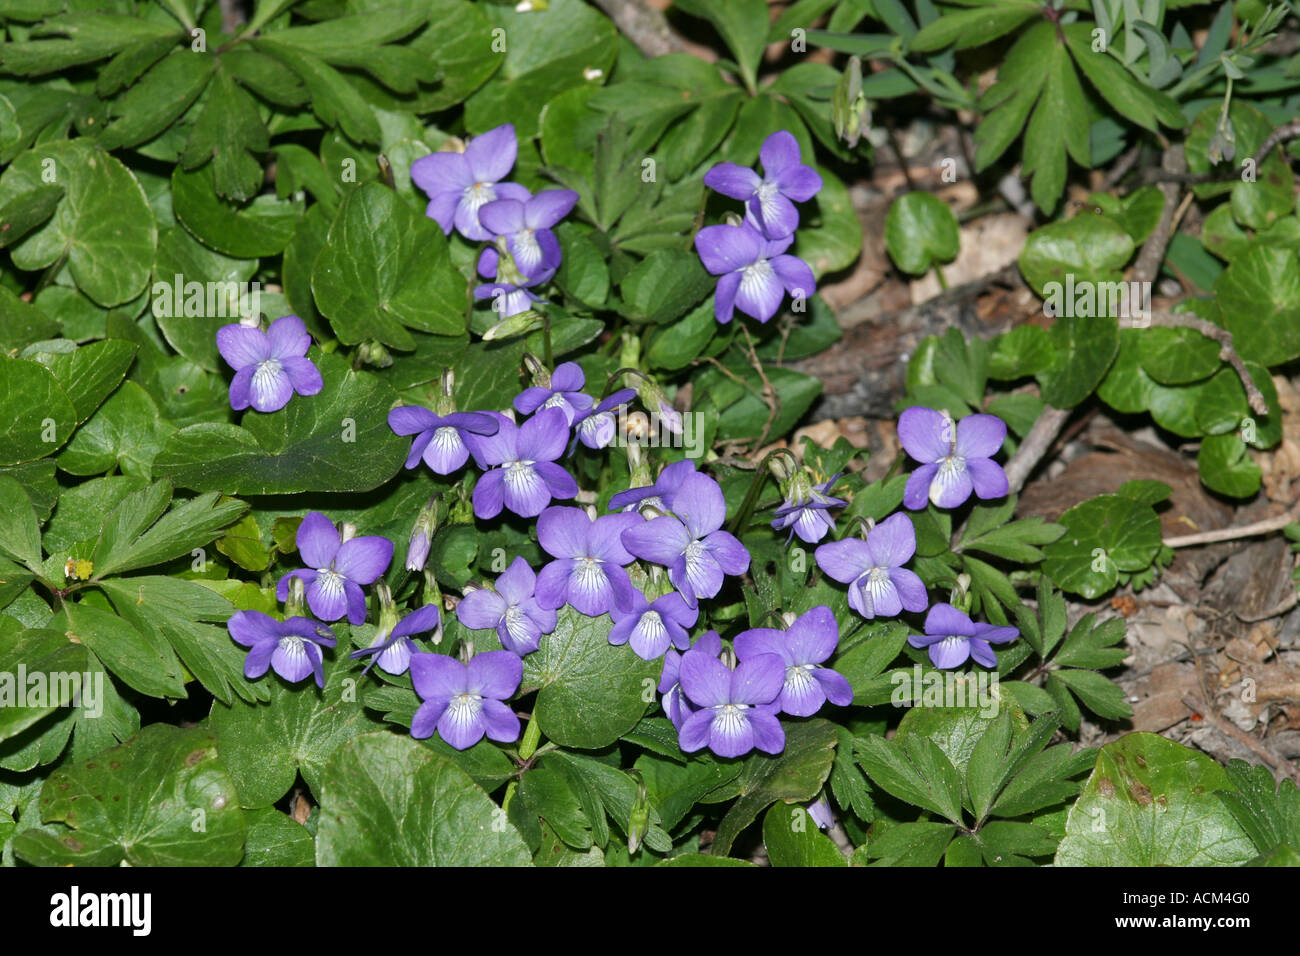 Flores violetas silvestres fotografías e imágenes de alta resolución - Alamy